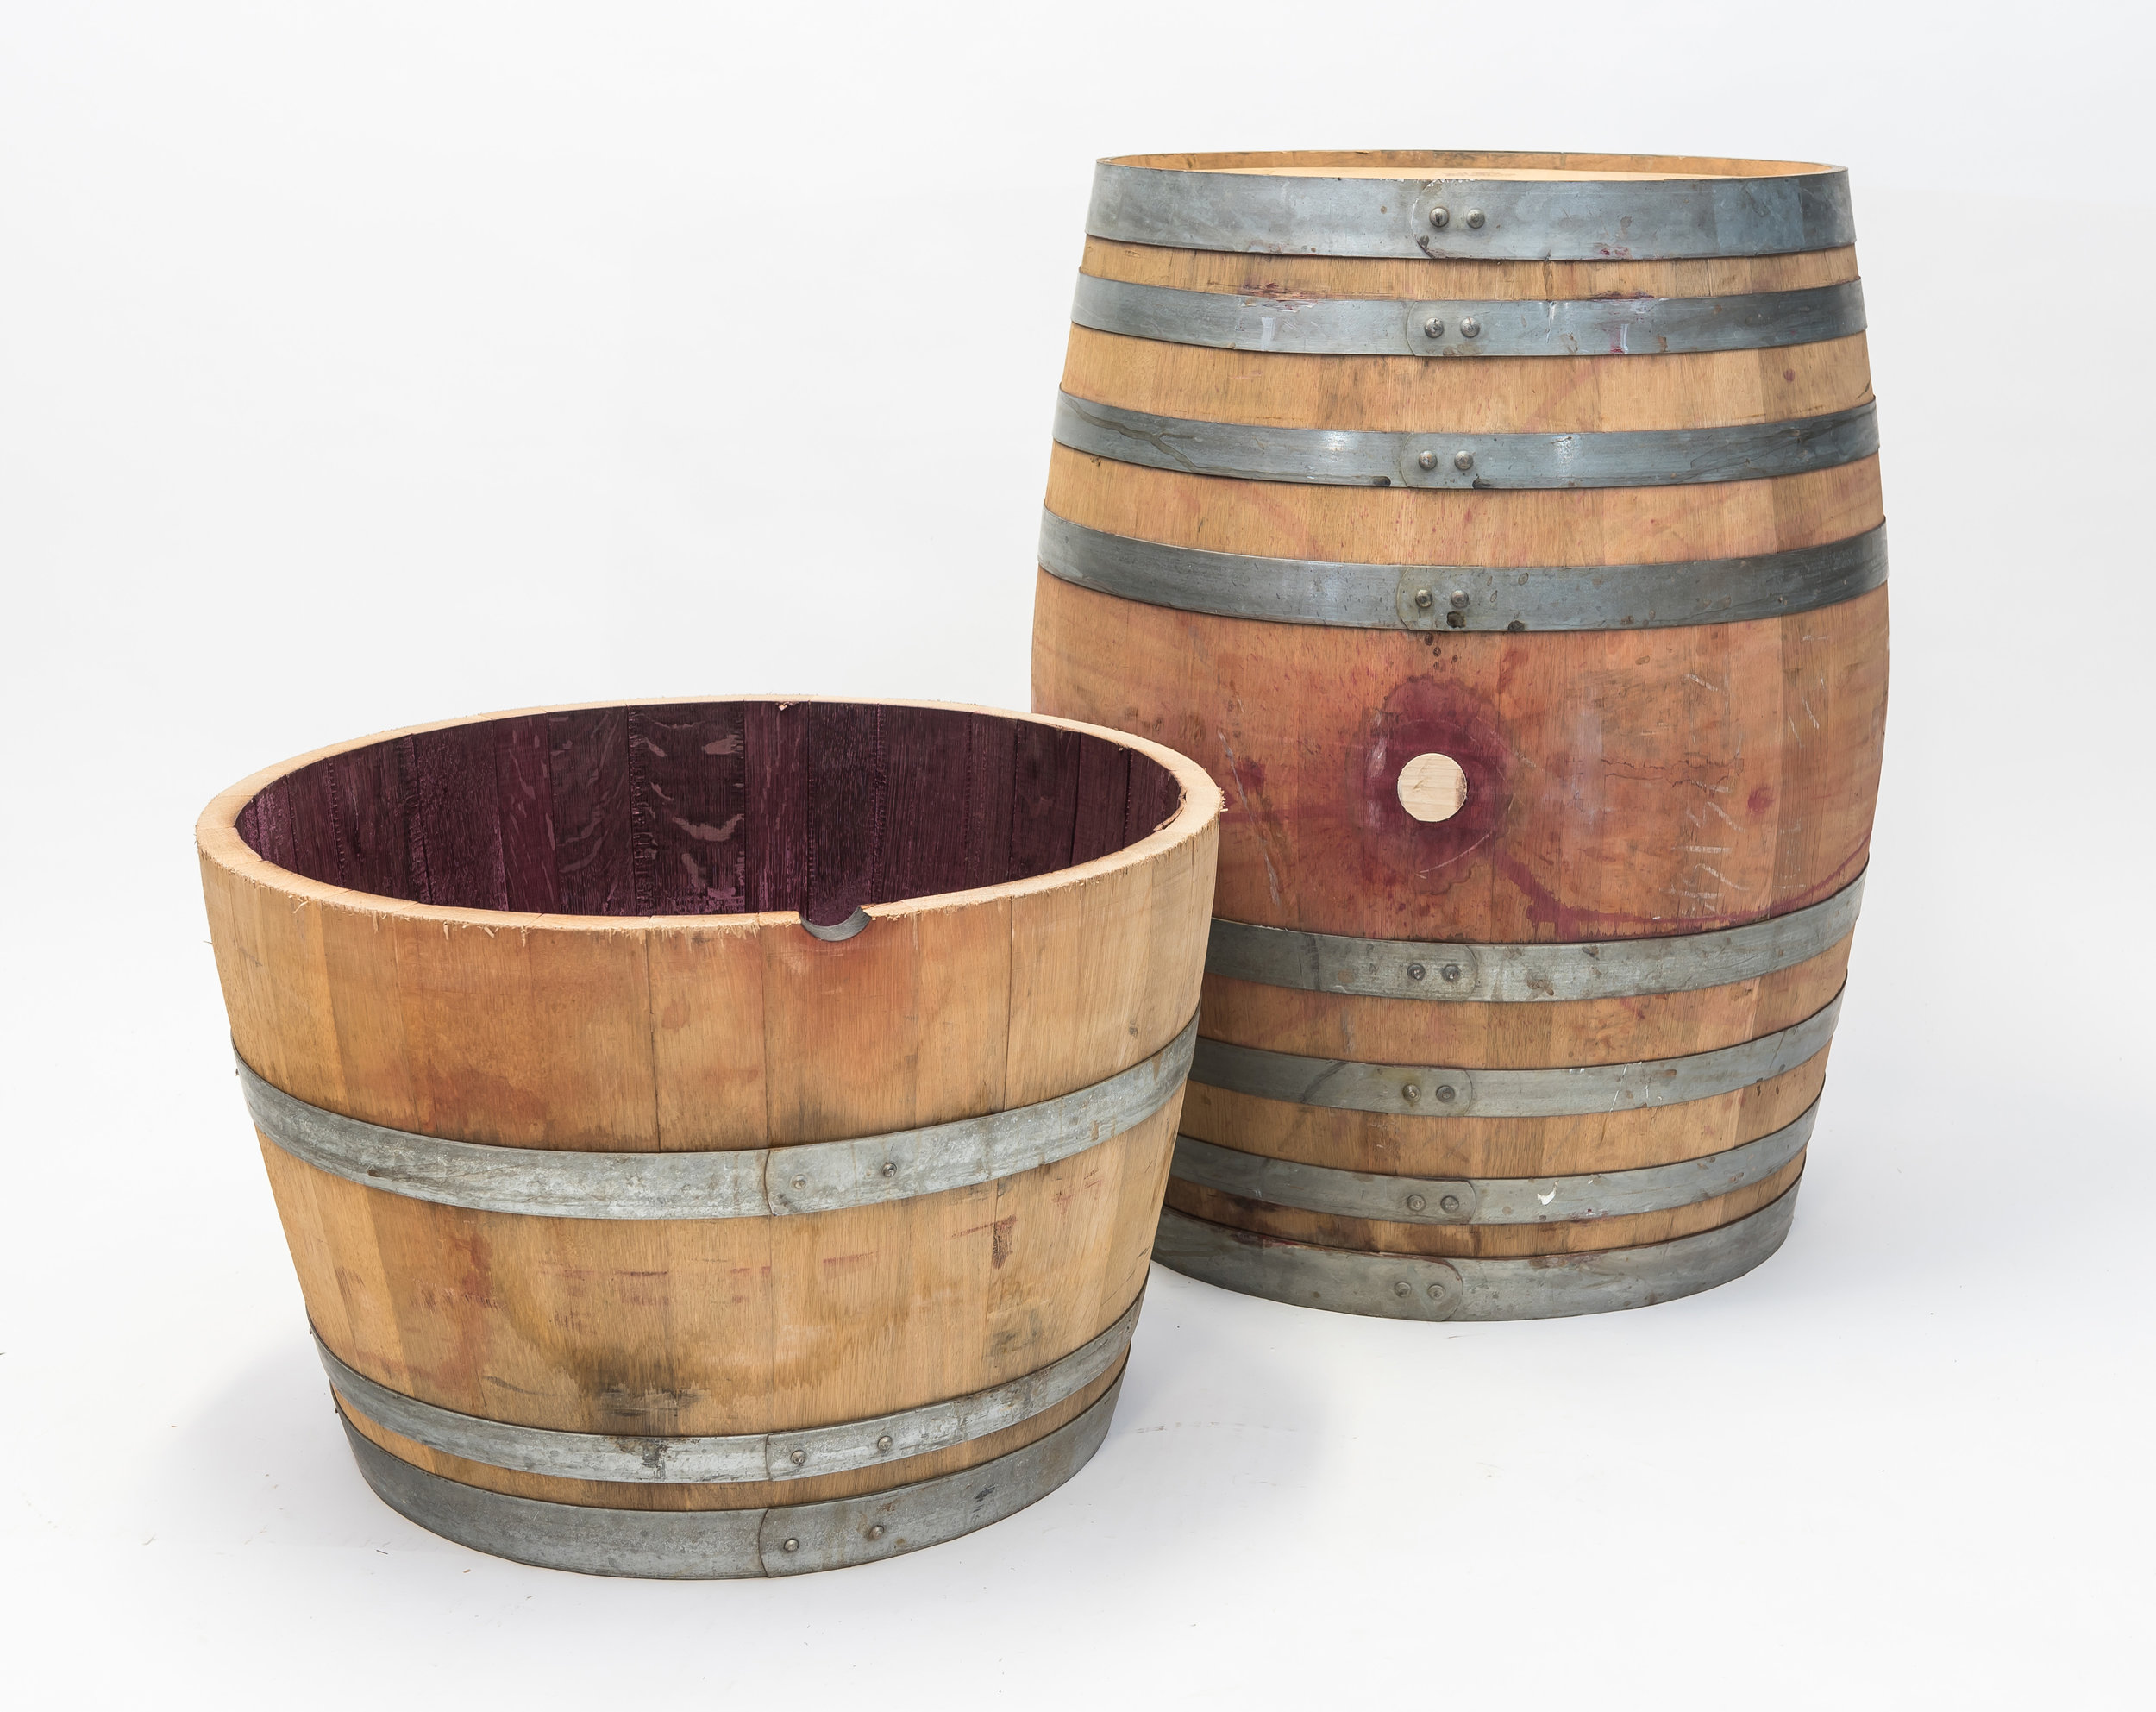  whole and half wine barrel dimensions: 27”x36” 